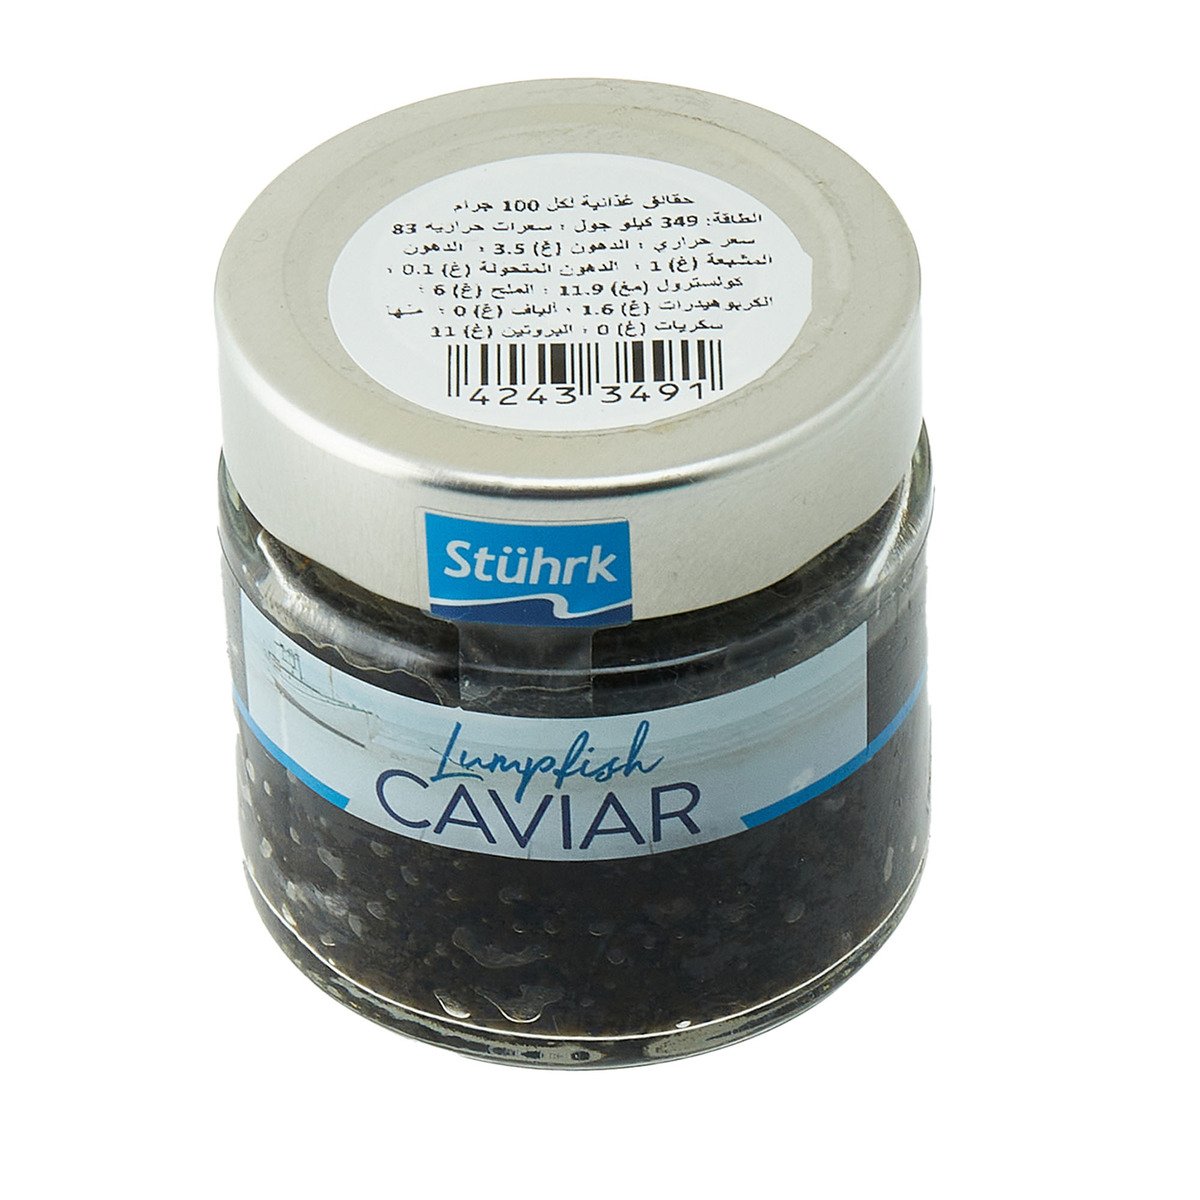 Stuhrk Deutscher Caviar 100 g